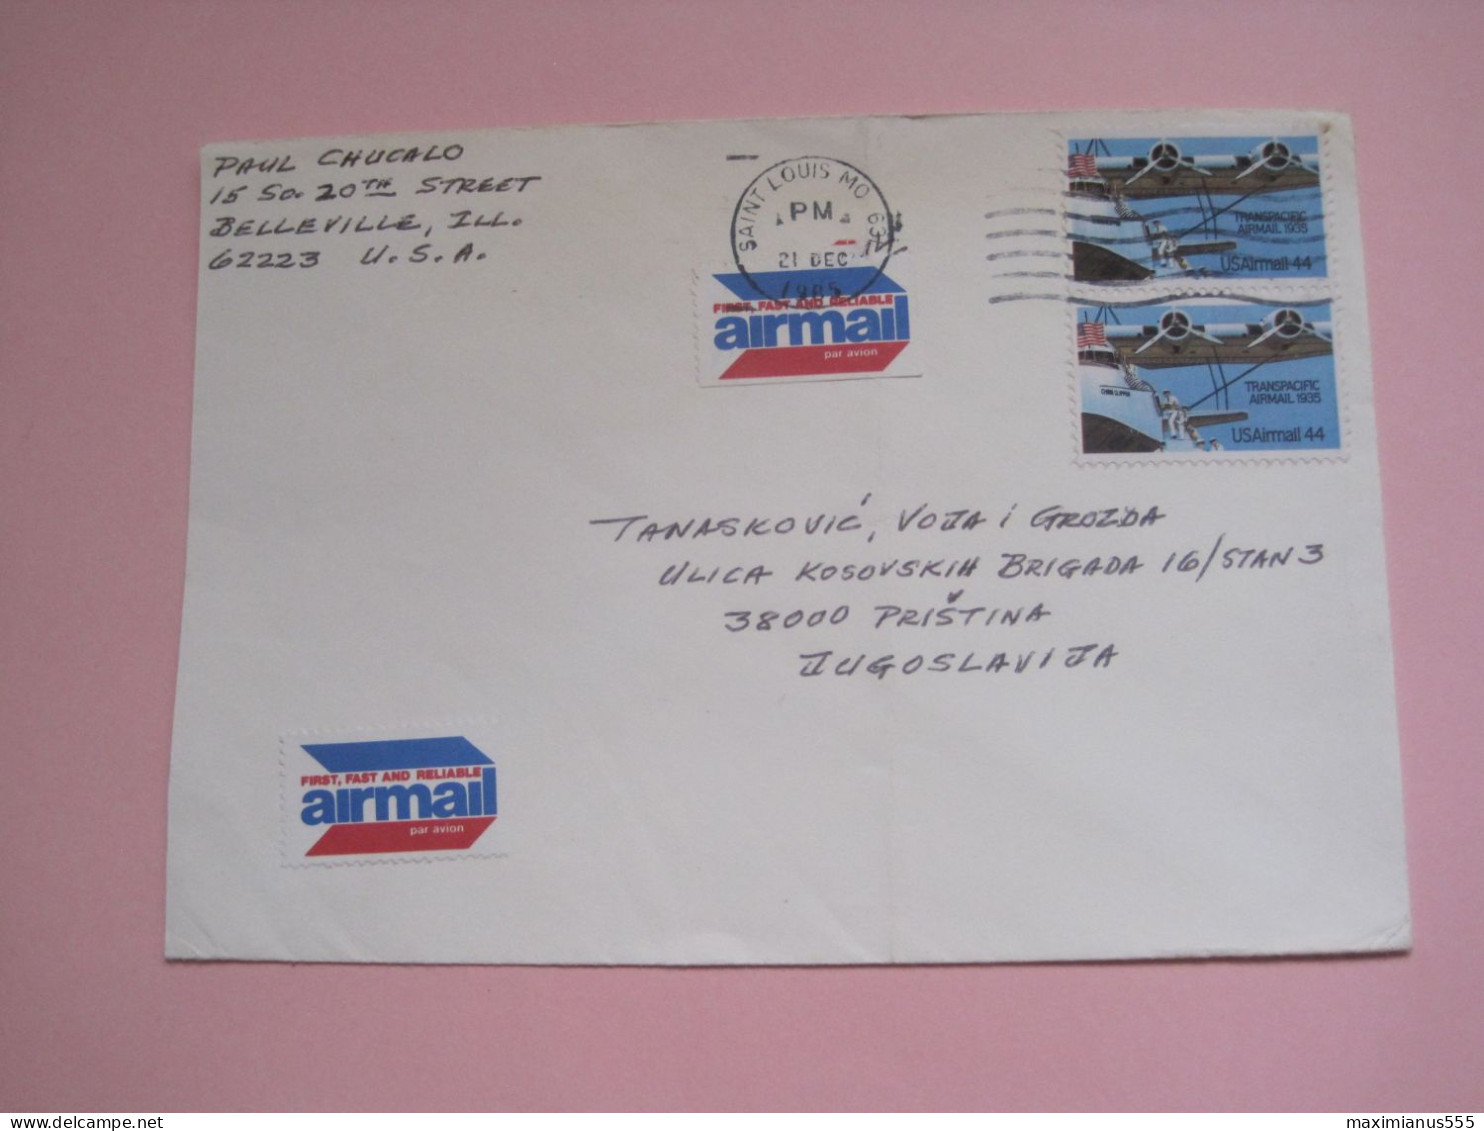 USA Letter 1985 To Yugoslavia - Gebruikt